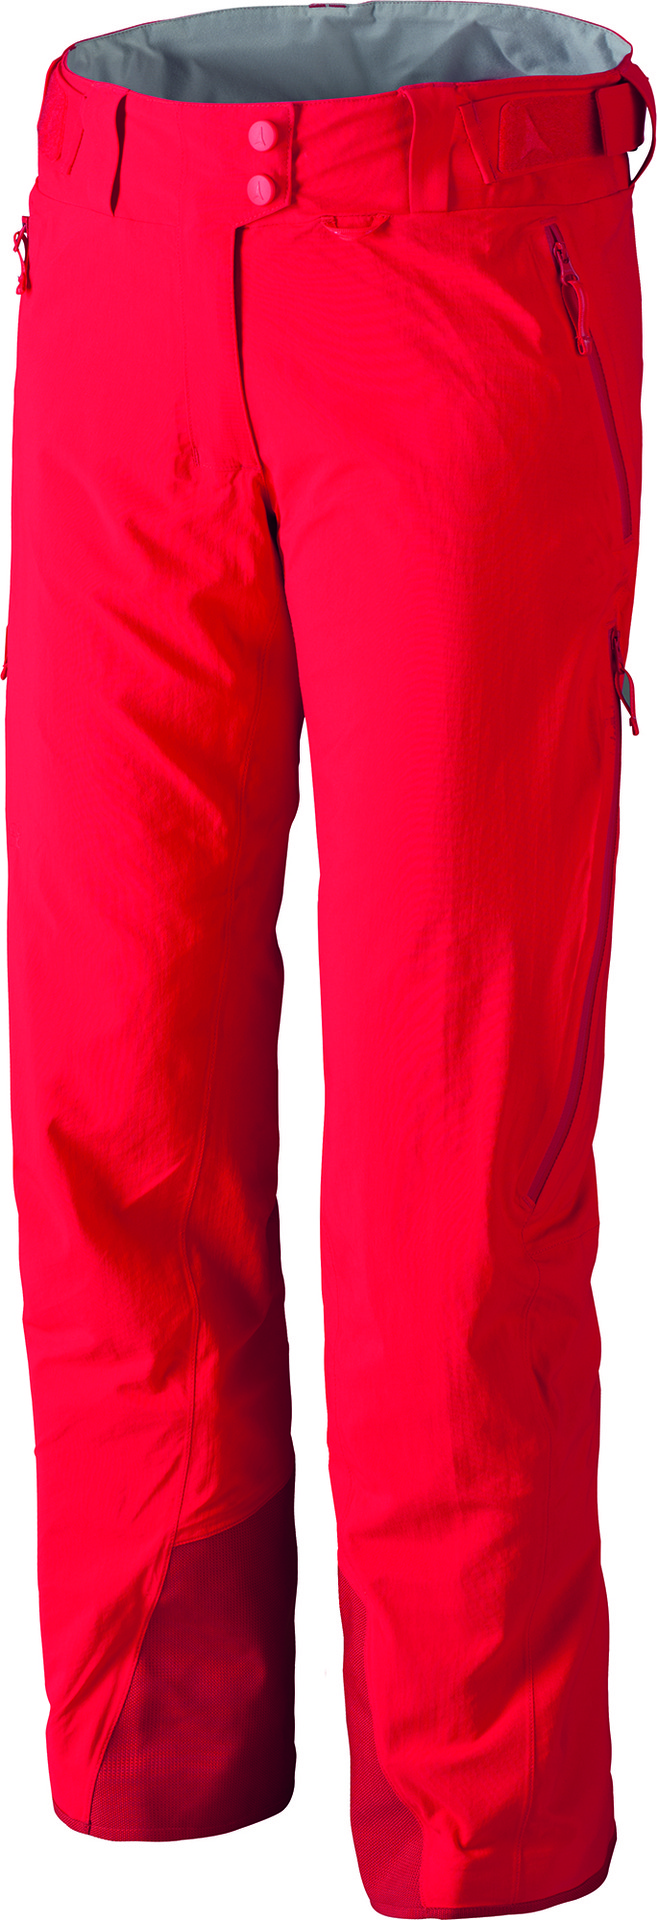 Dámská kolekce Atomic Skiwear - řada Ridgeline - kalhoty